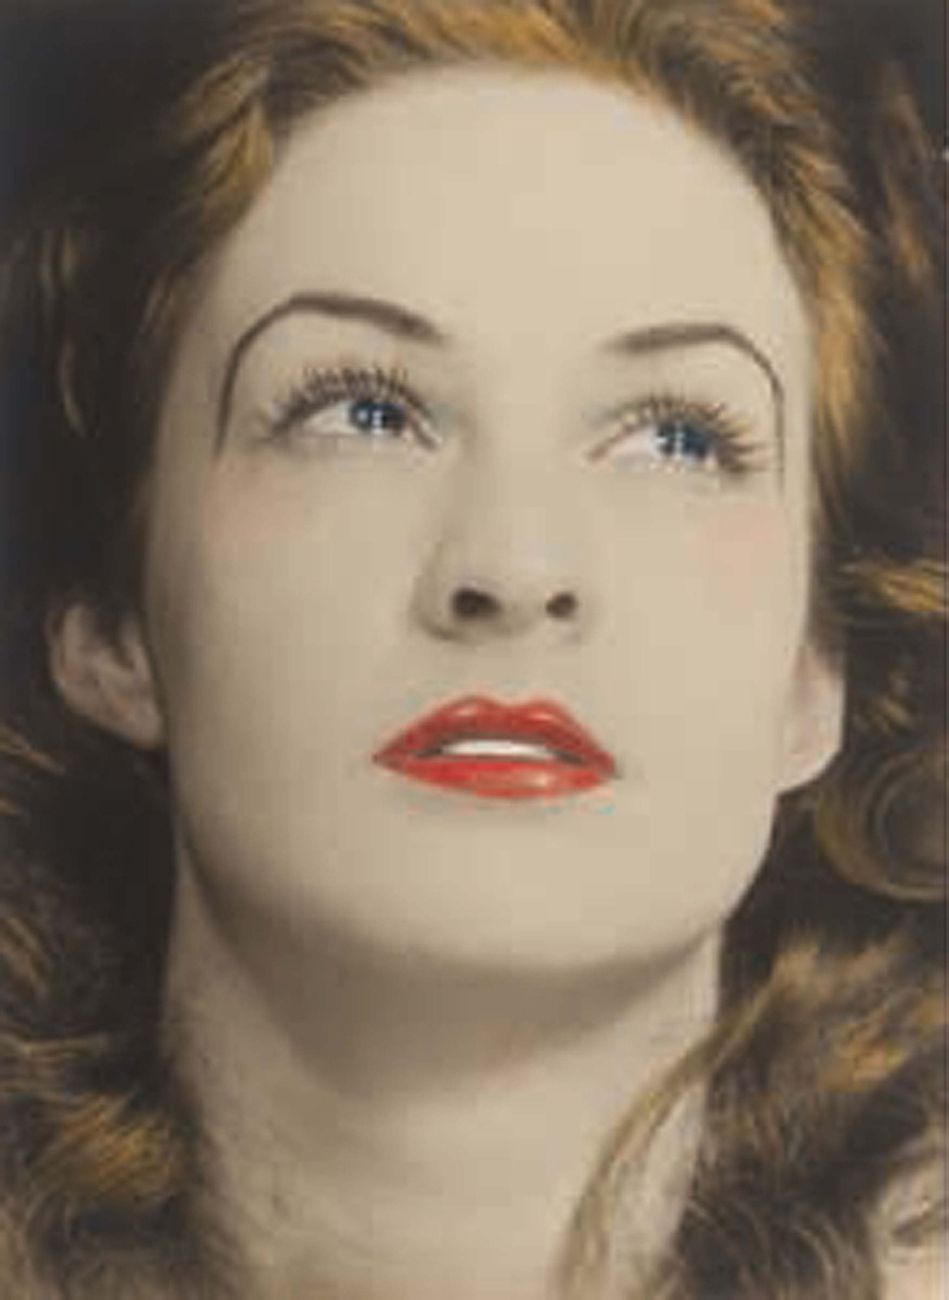 Man Ray, Portrait of a Tearful Woman, 1936